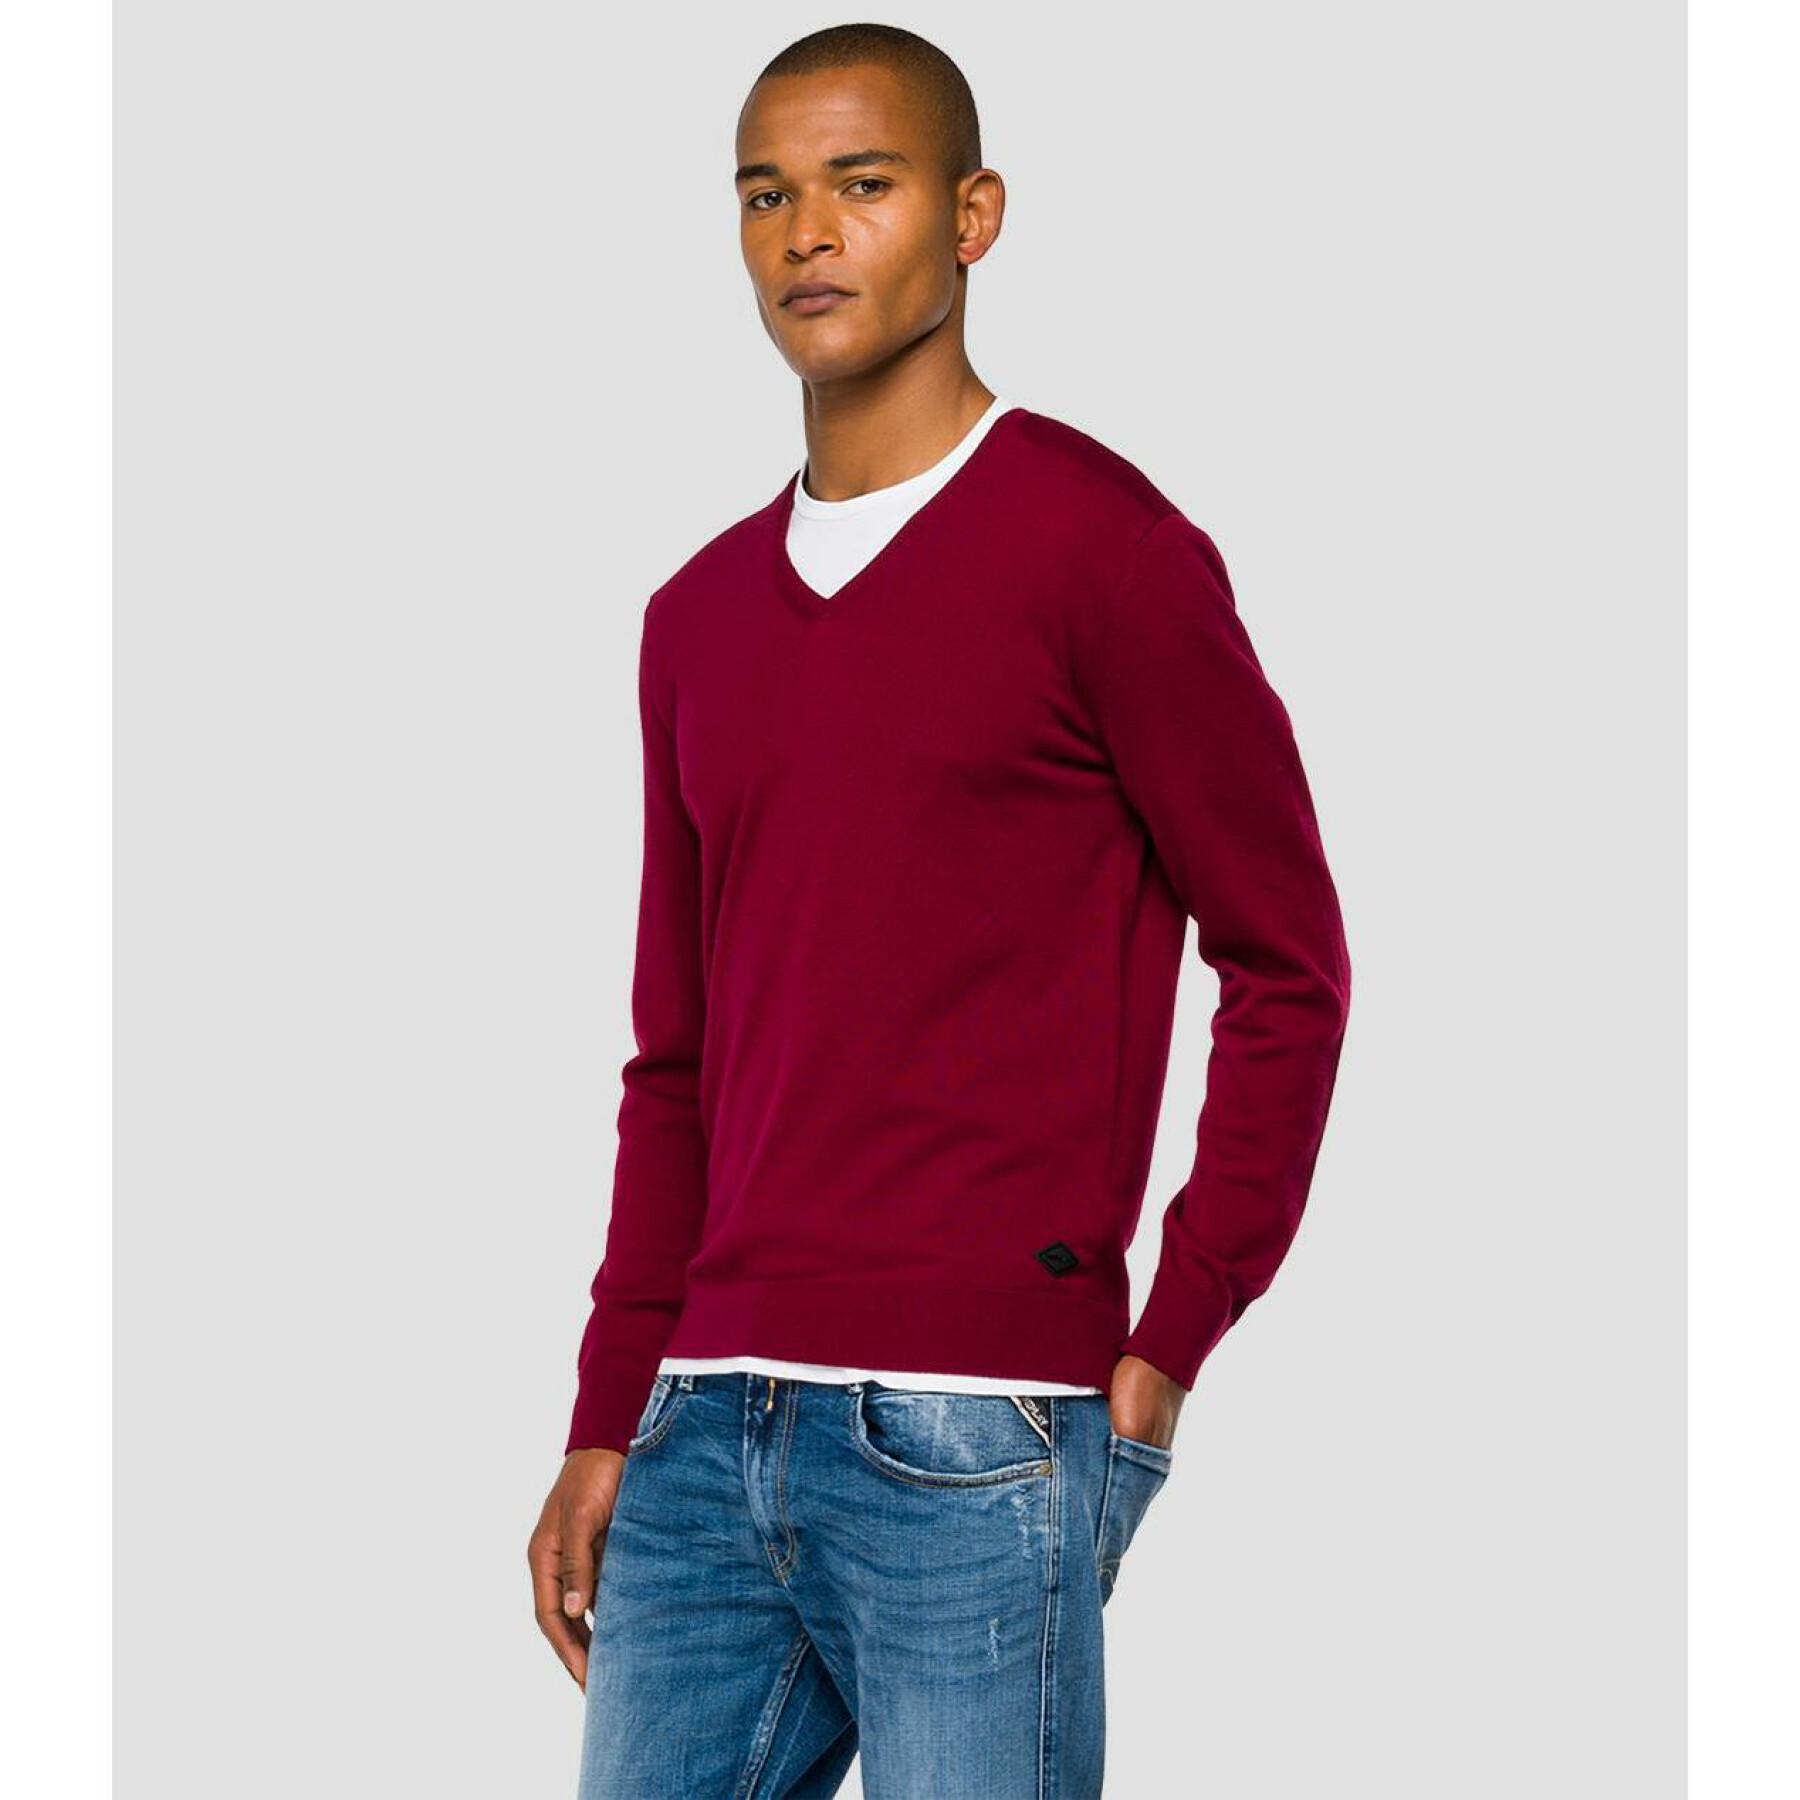 Wool blend sweater Replay hyperflex